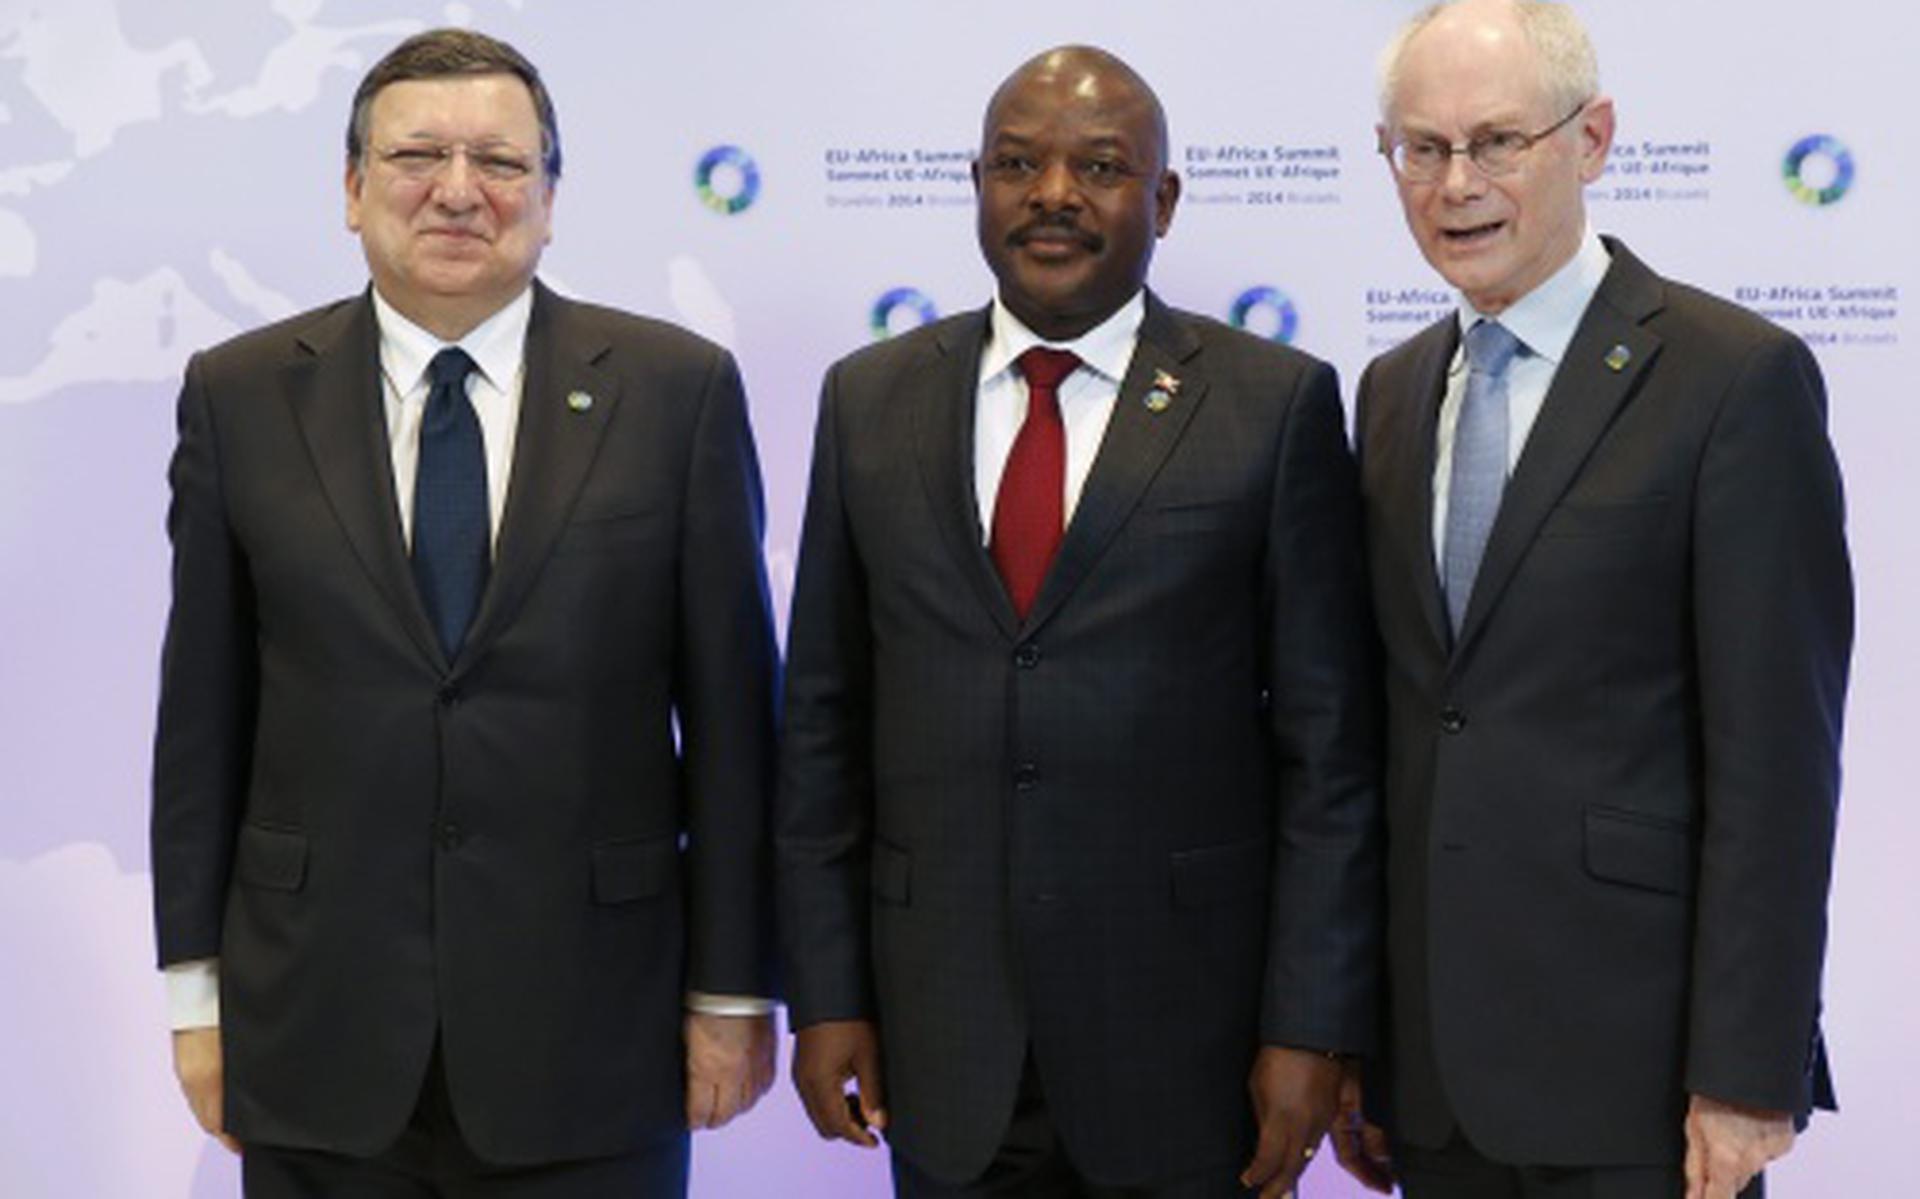 EU beëindigt hulp aan regering Burundi